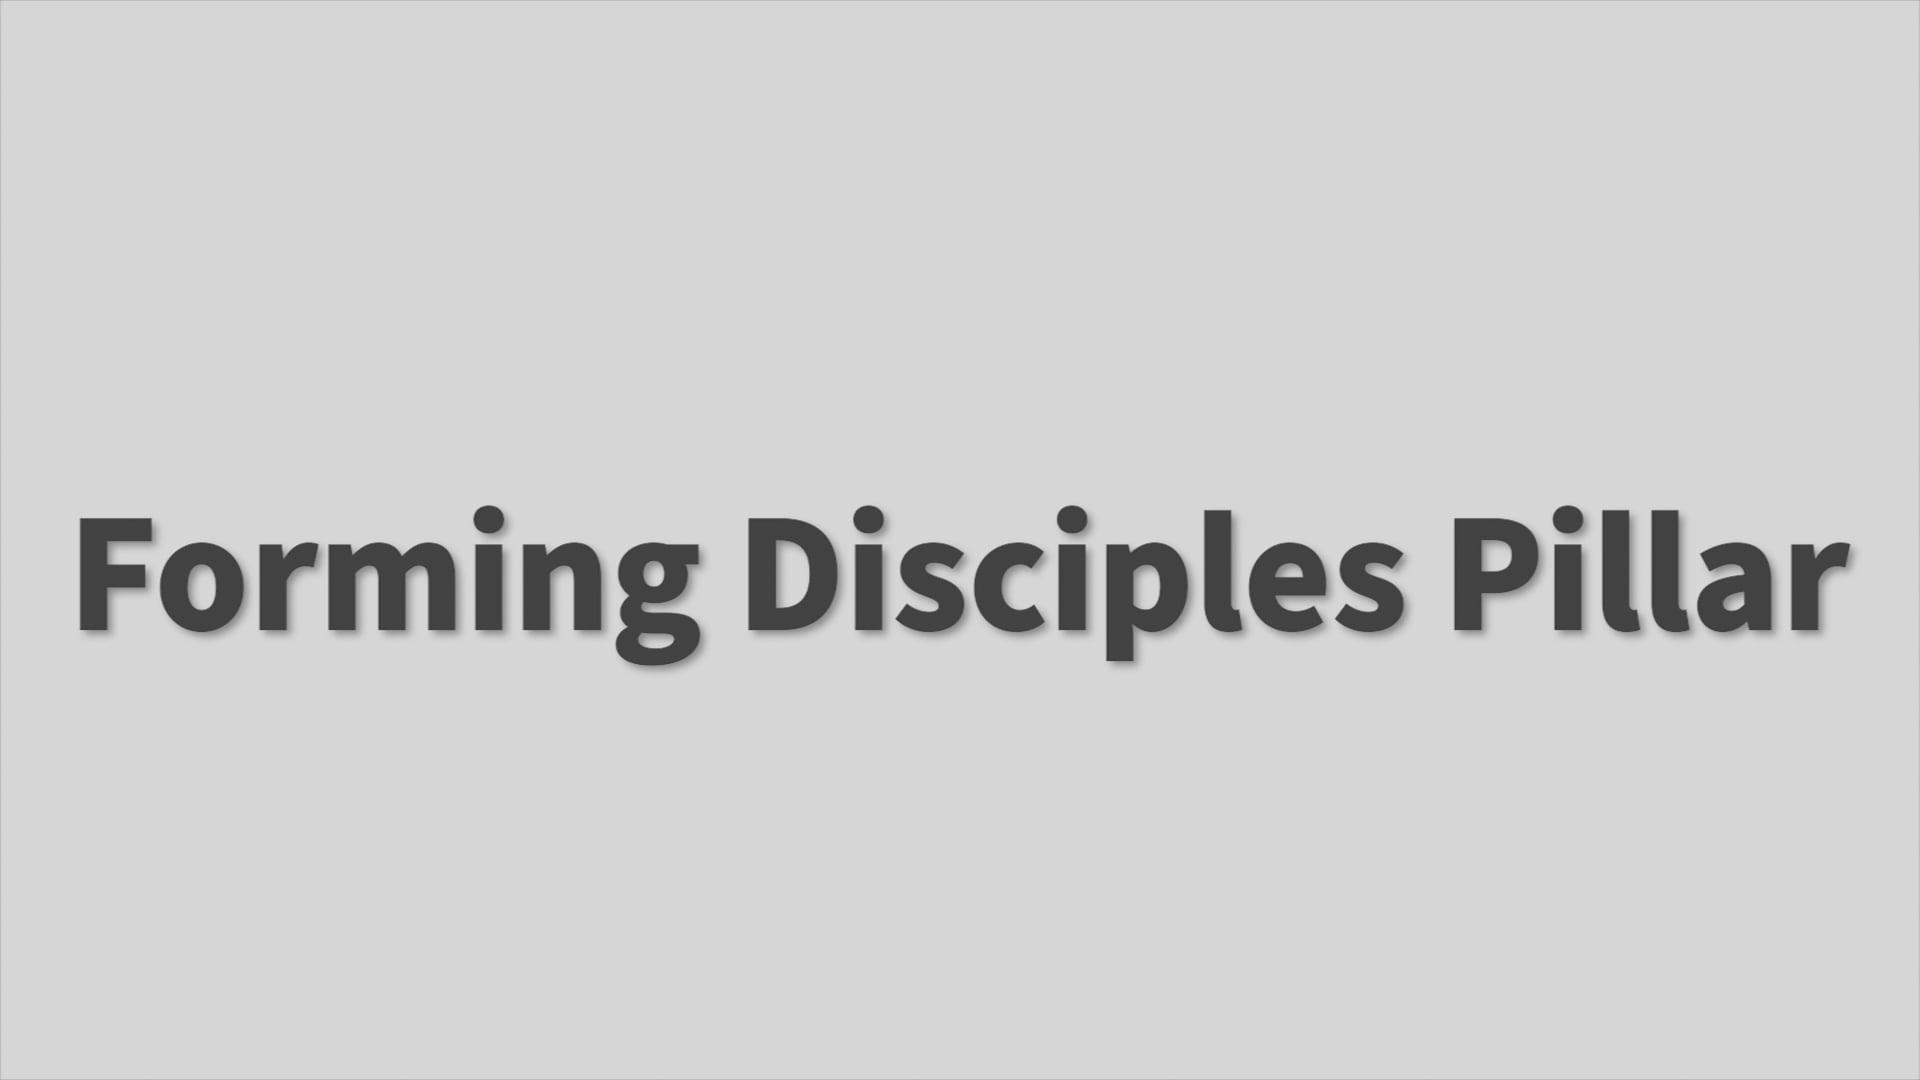 Forming Disciples Pillar